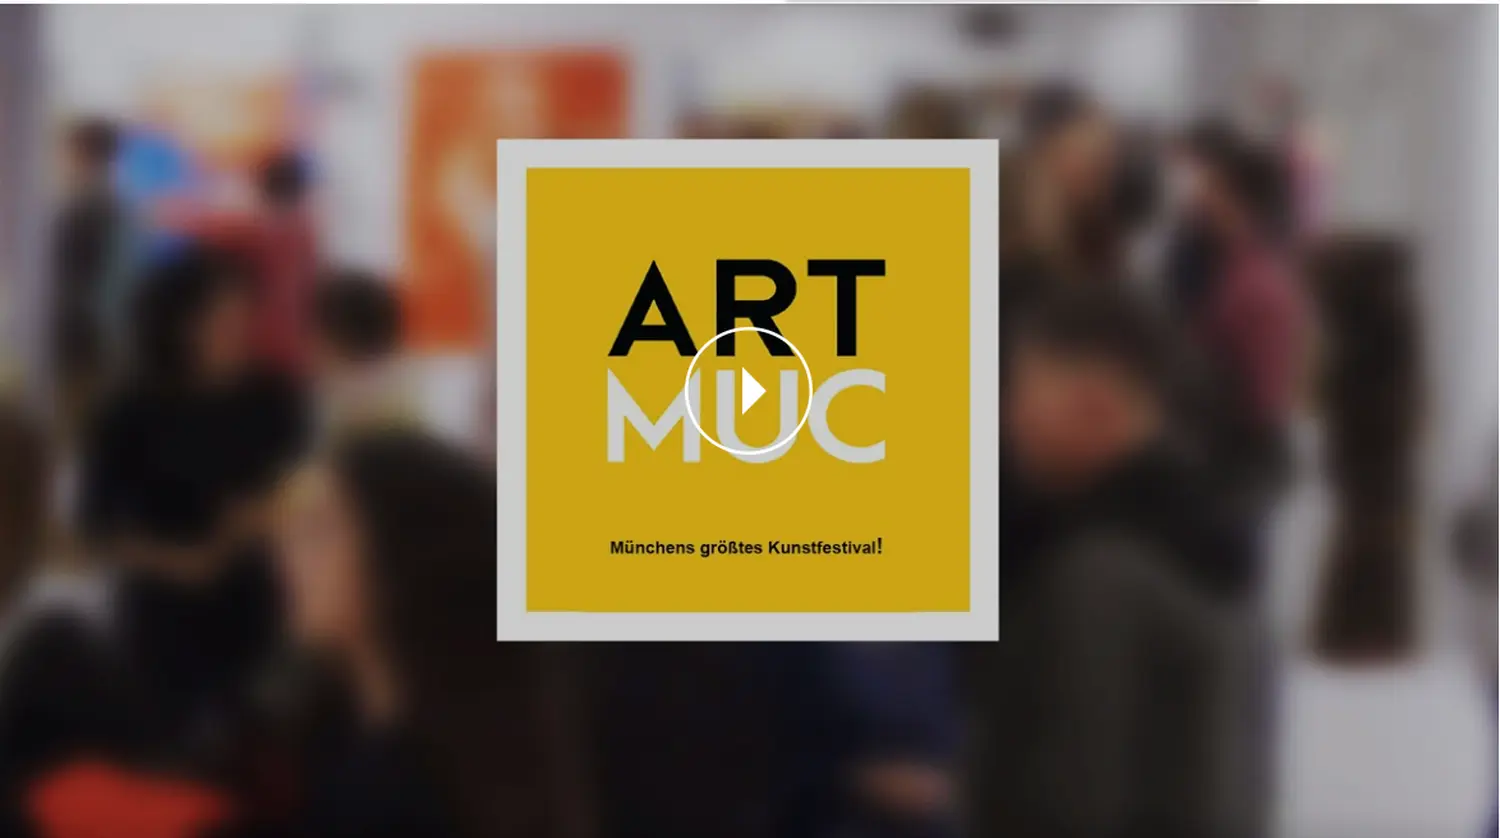 ART MUC Münchens größtes Kunstfestival!